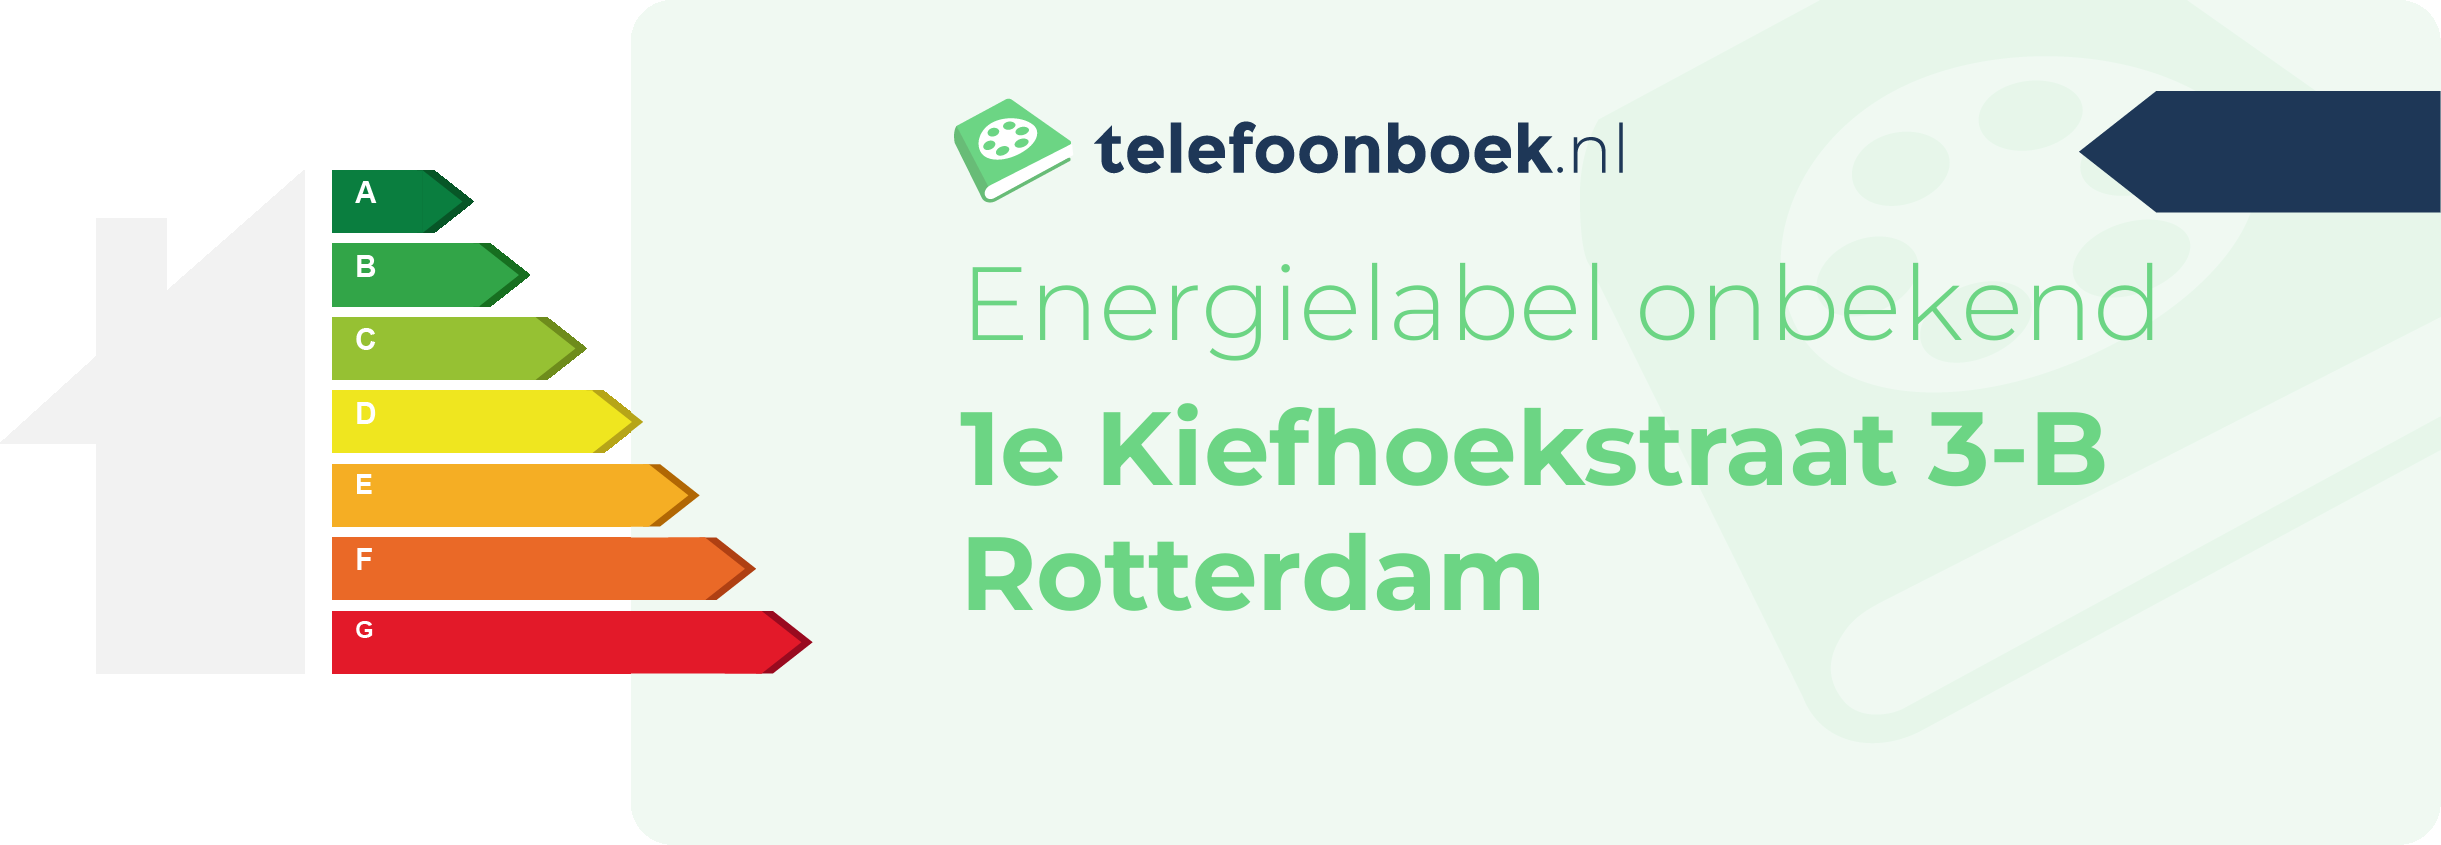 Energielabel 1e Kiefhoekstraat 3-B Rotterdam